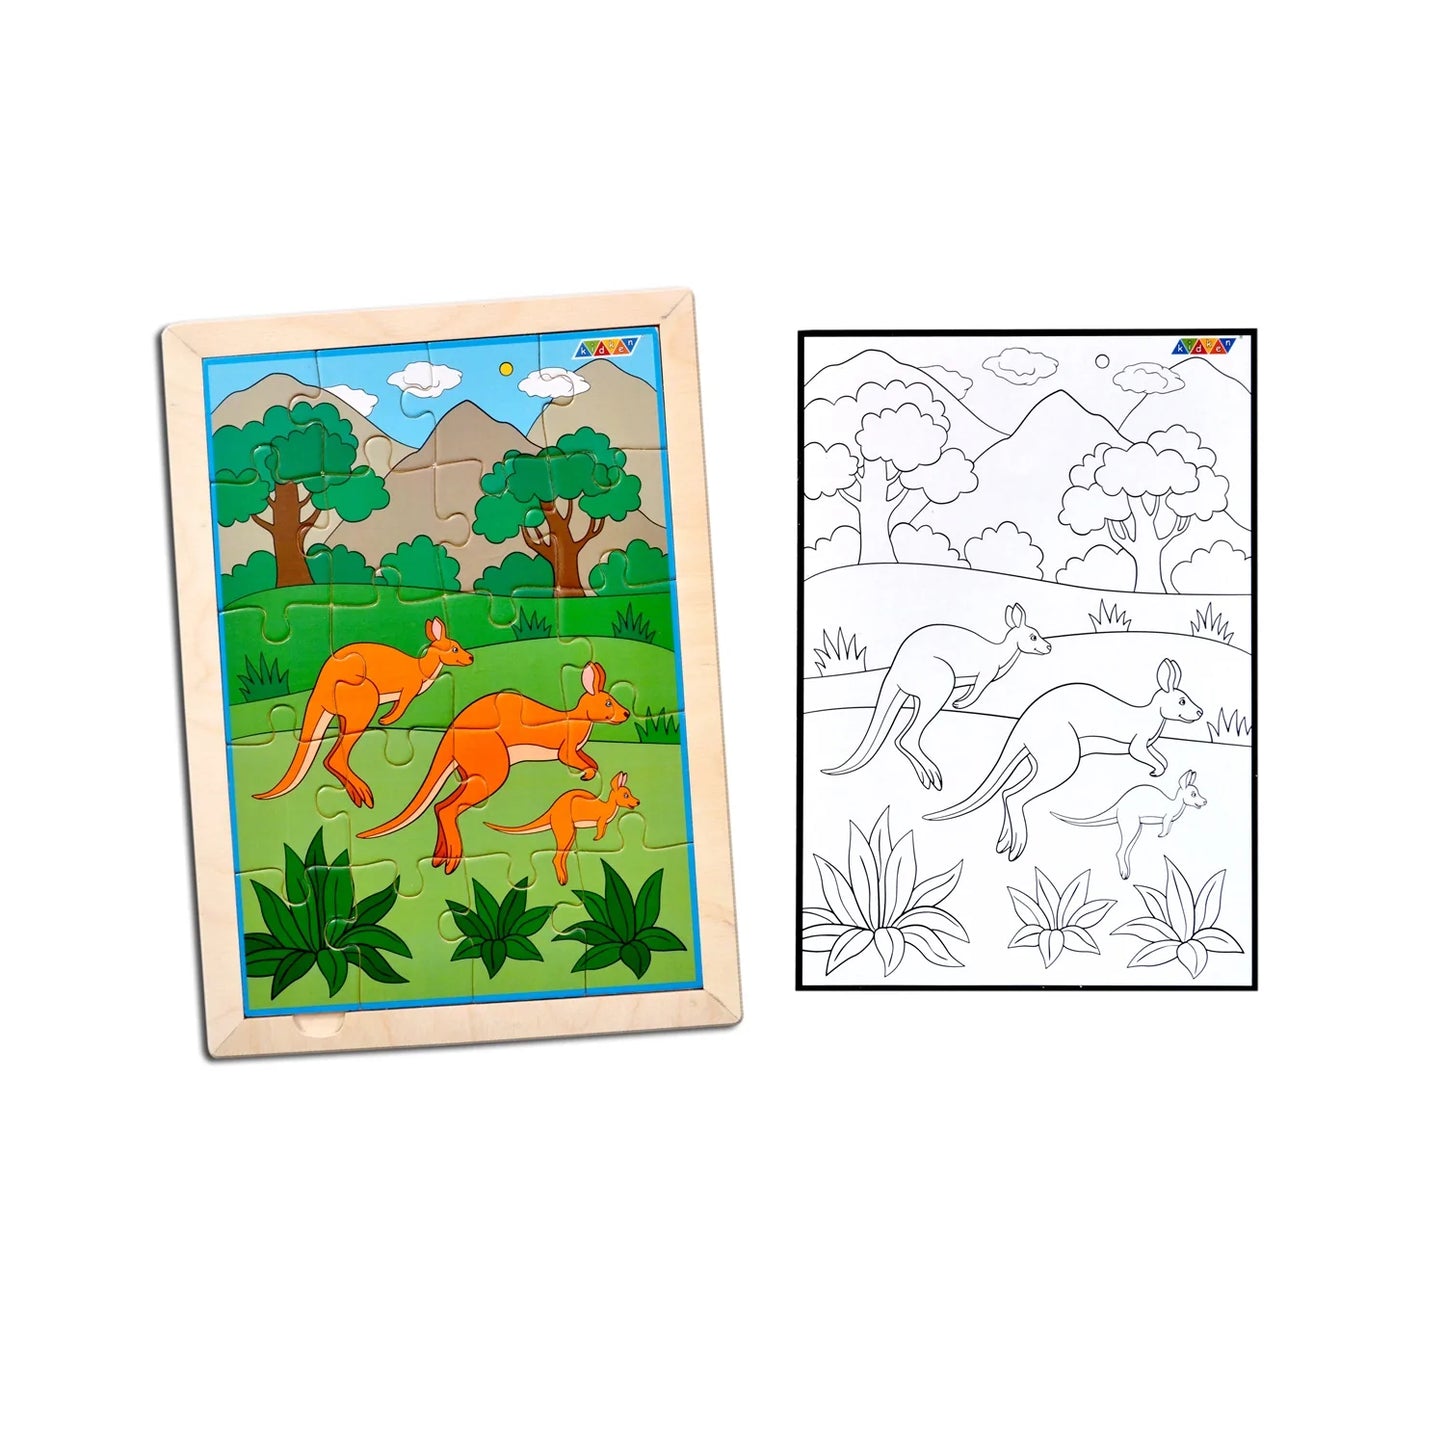 Kangaroo Family Jigsaw Puzzle With Colouring Sheet